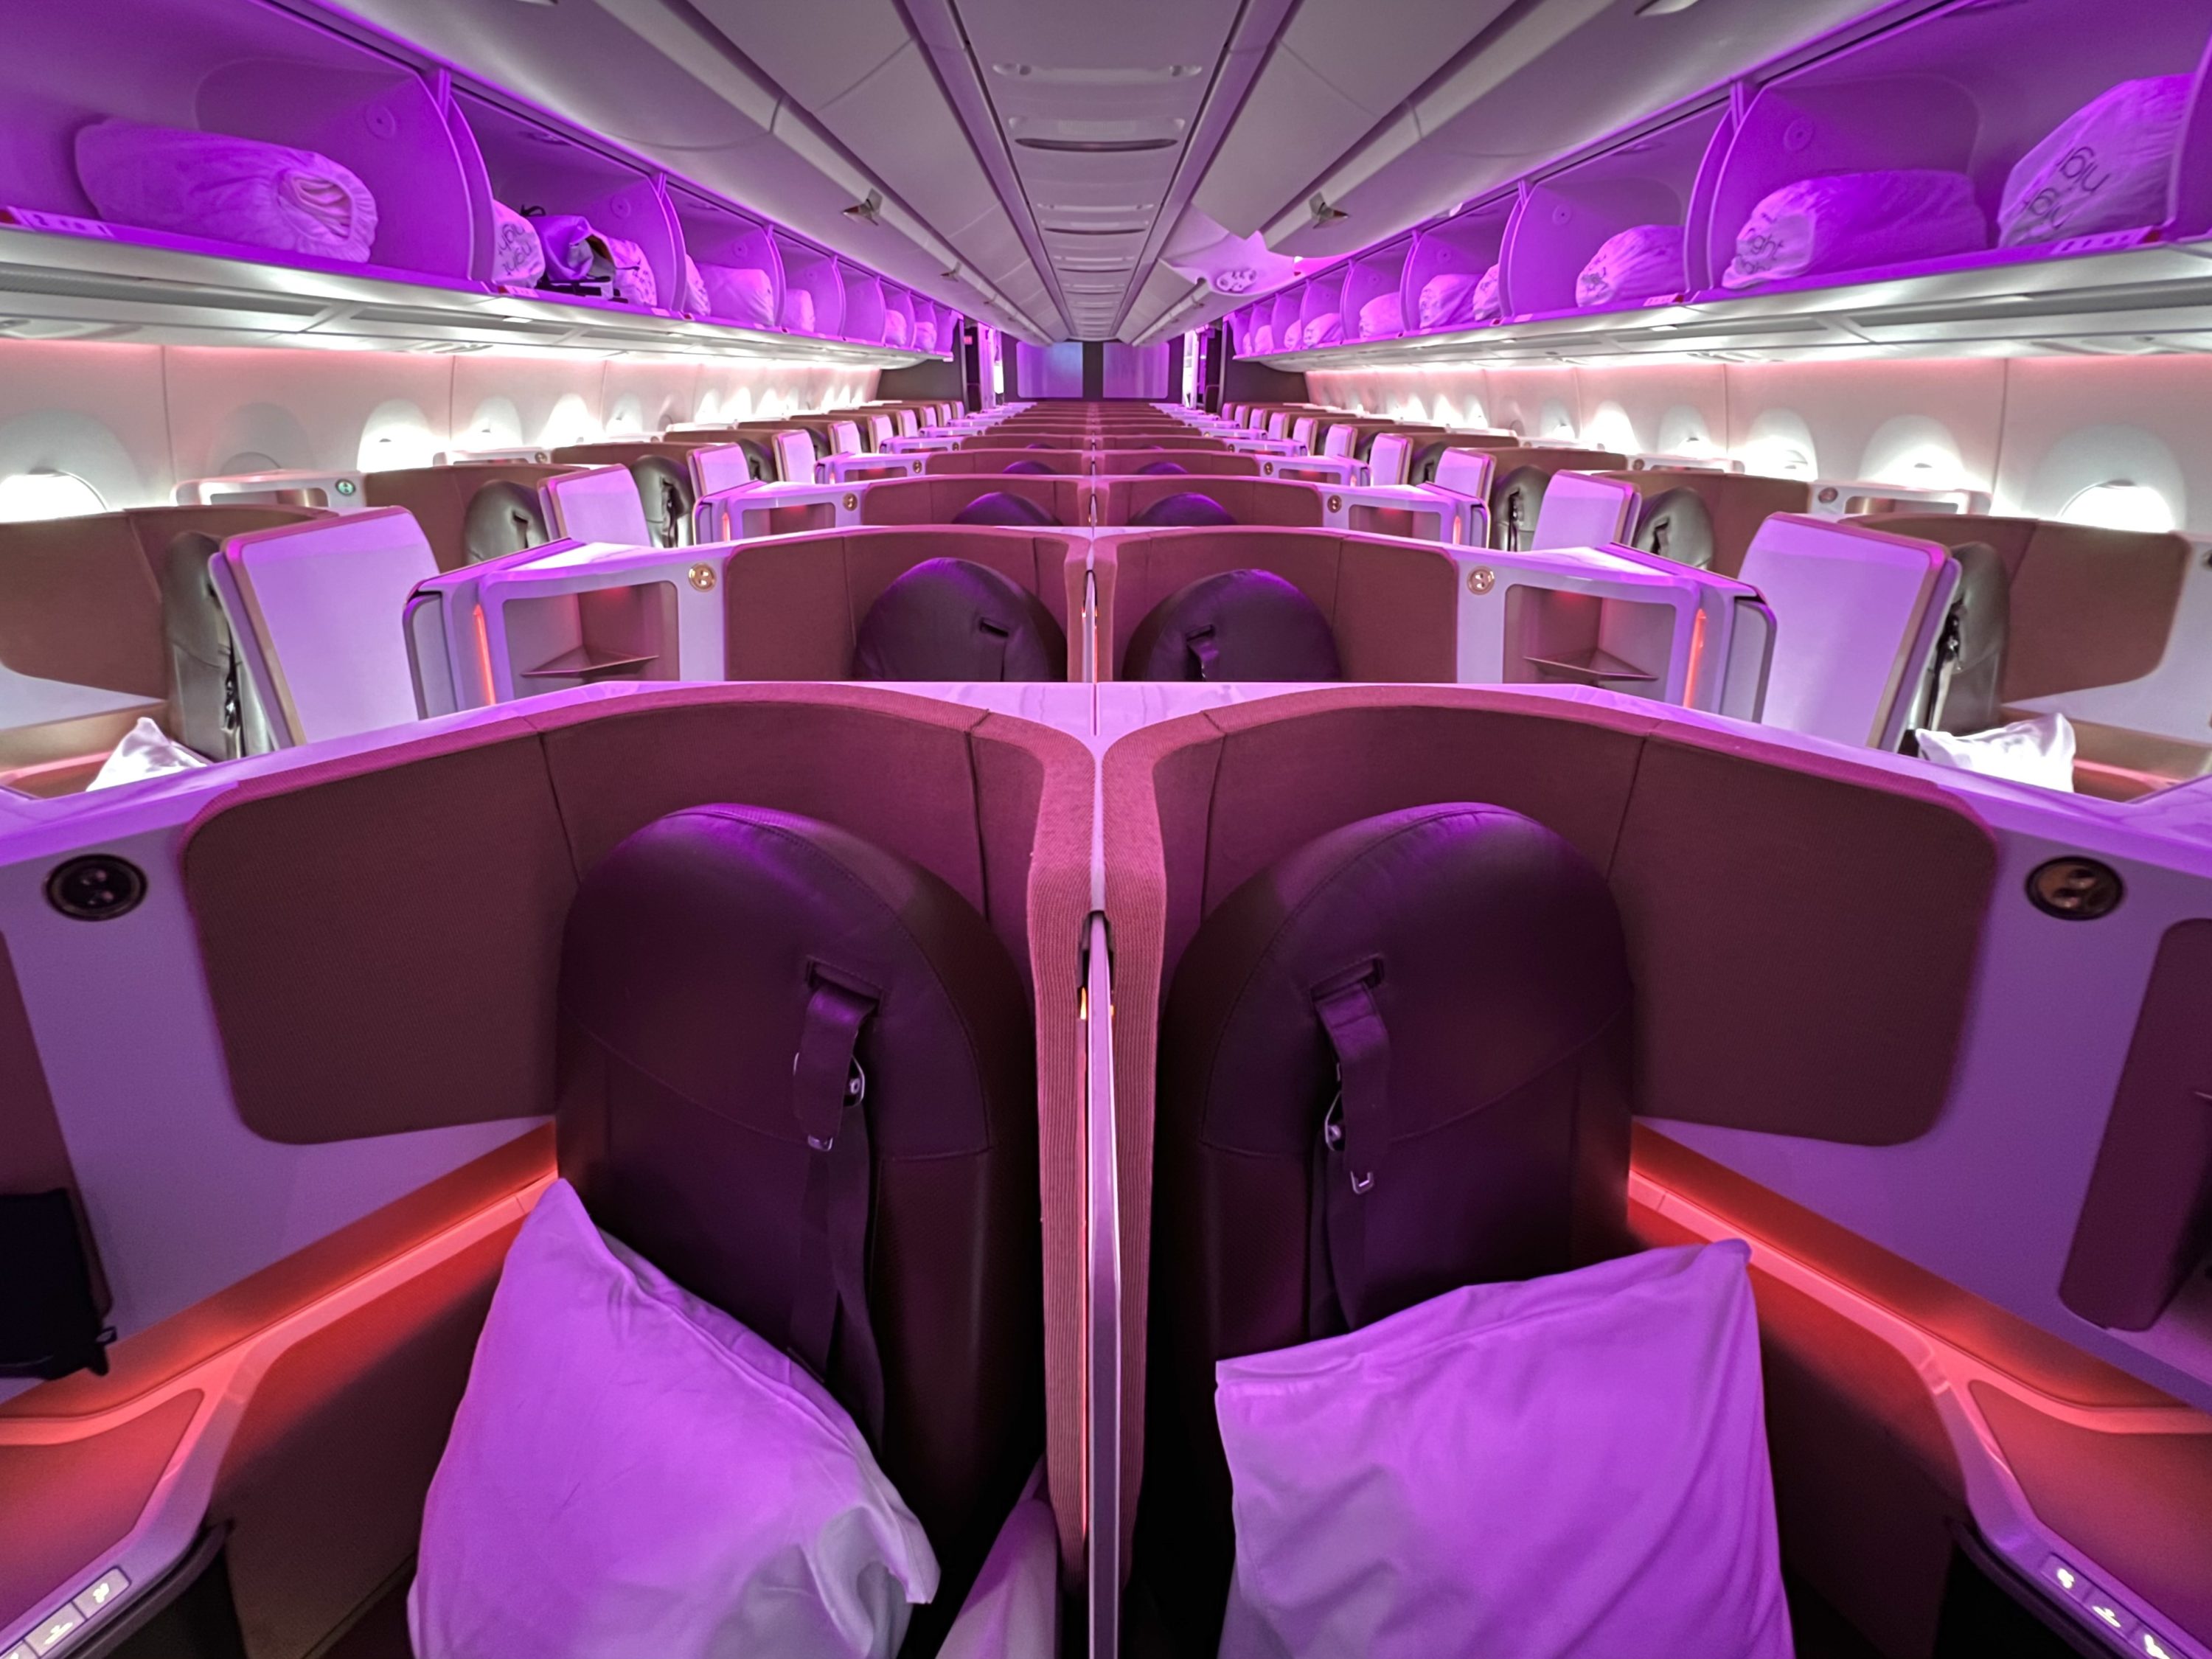 Virgin Atlantic A350 Upper Suite cabin